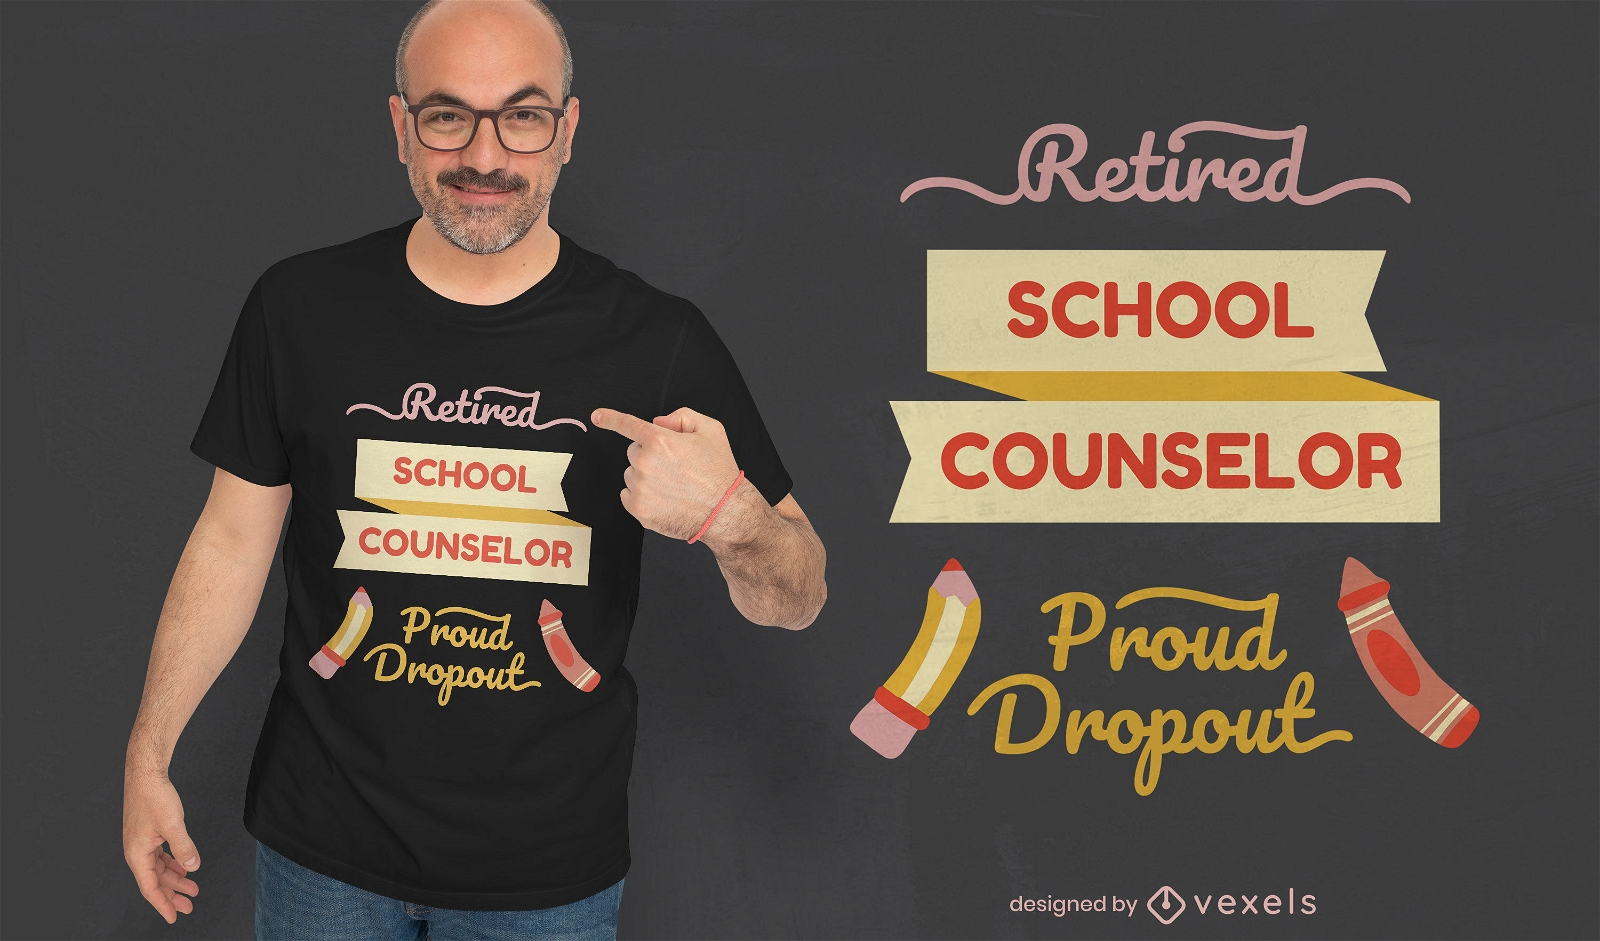 School counselor retirement t-shirt design